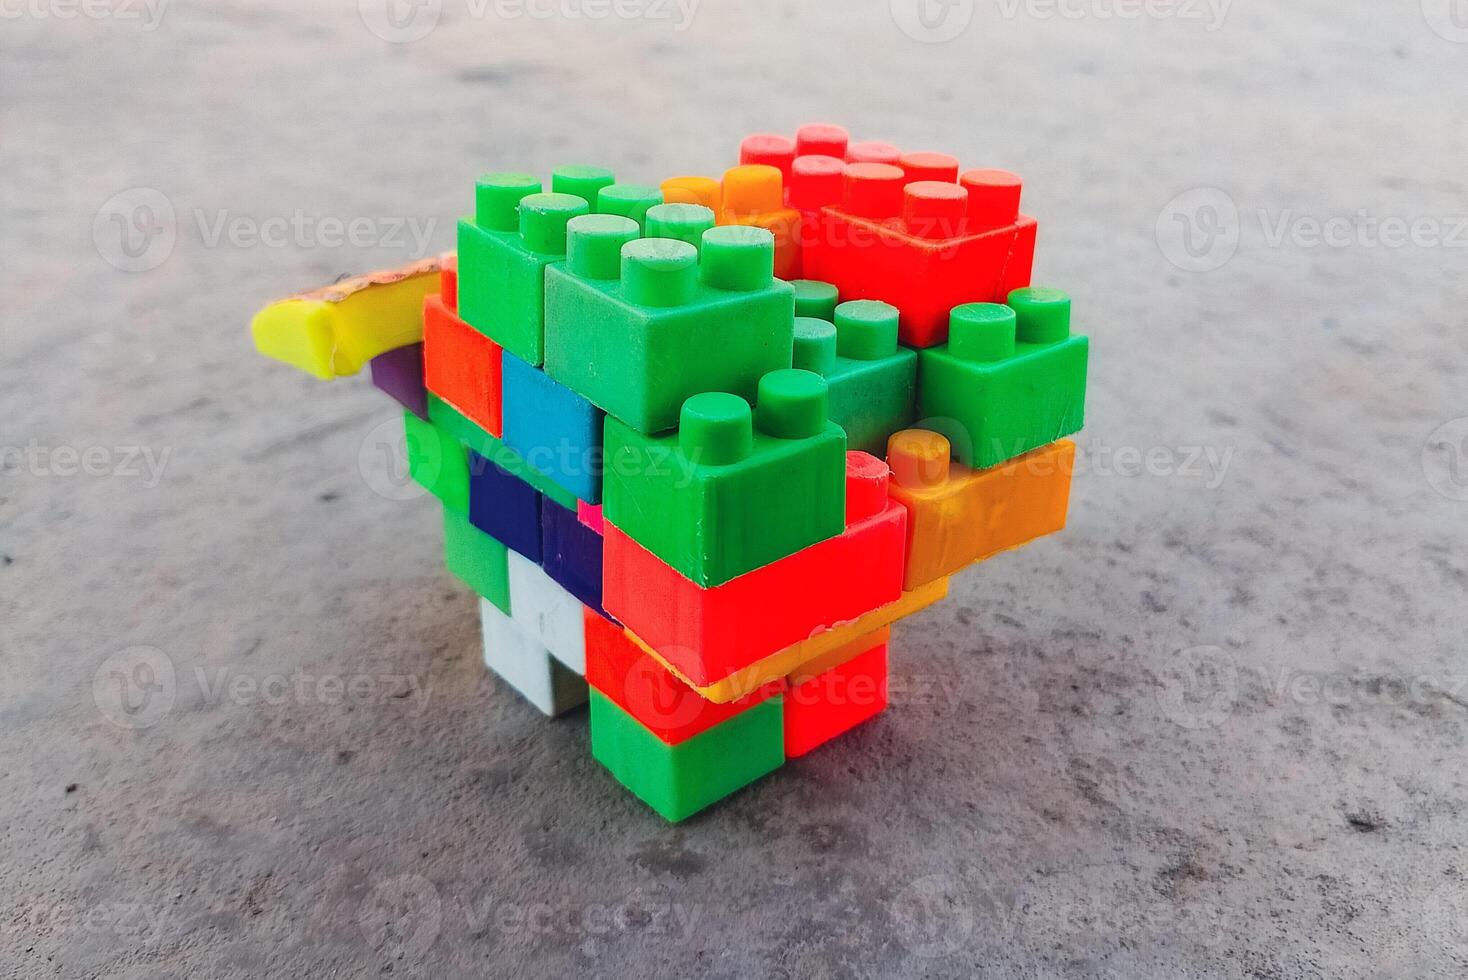 Randomly Made Design with Toy Building Blocks photo